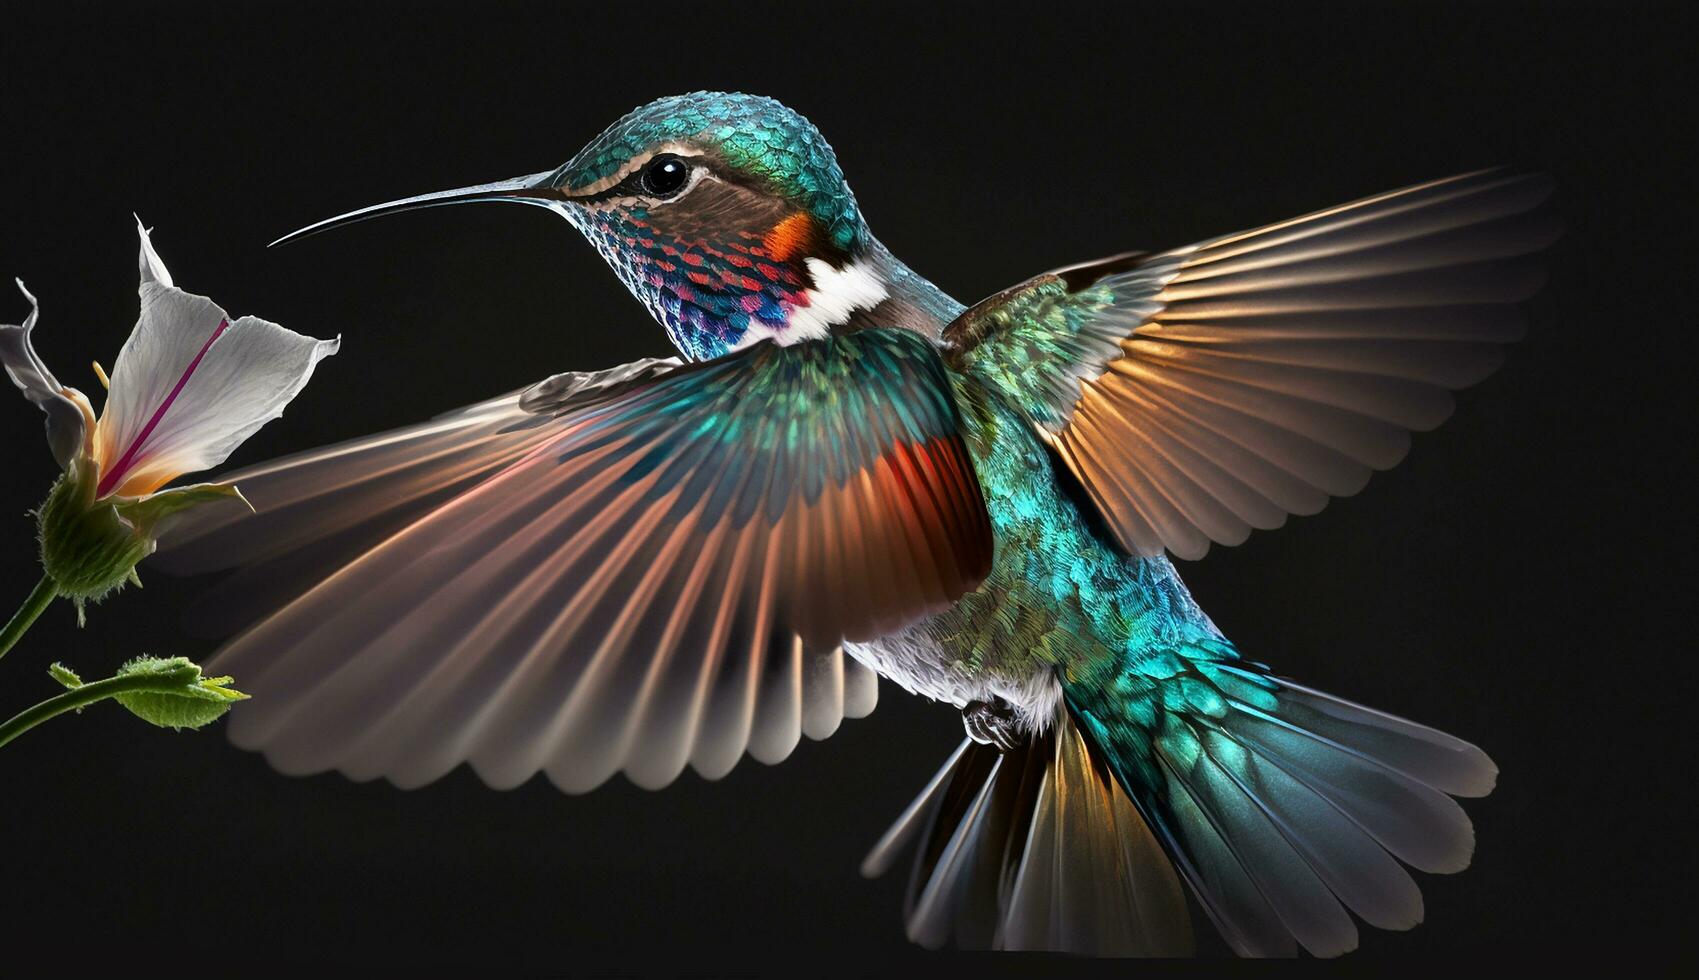 mooi rufous kolibrie foto behang ai gegenereerd beeld